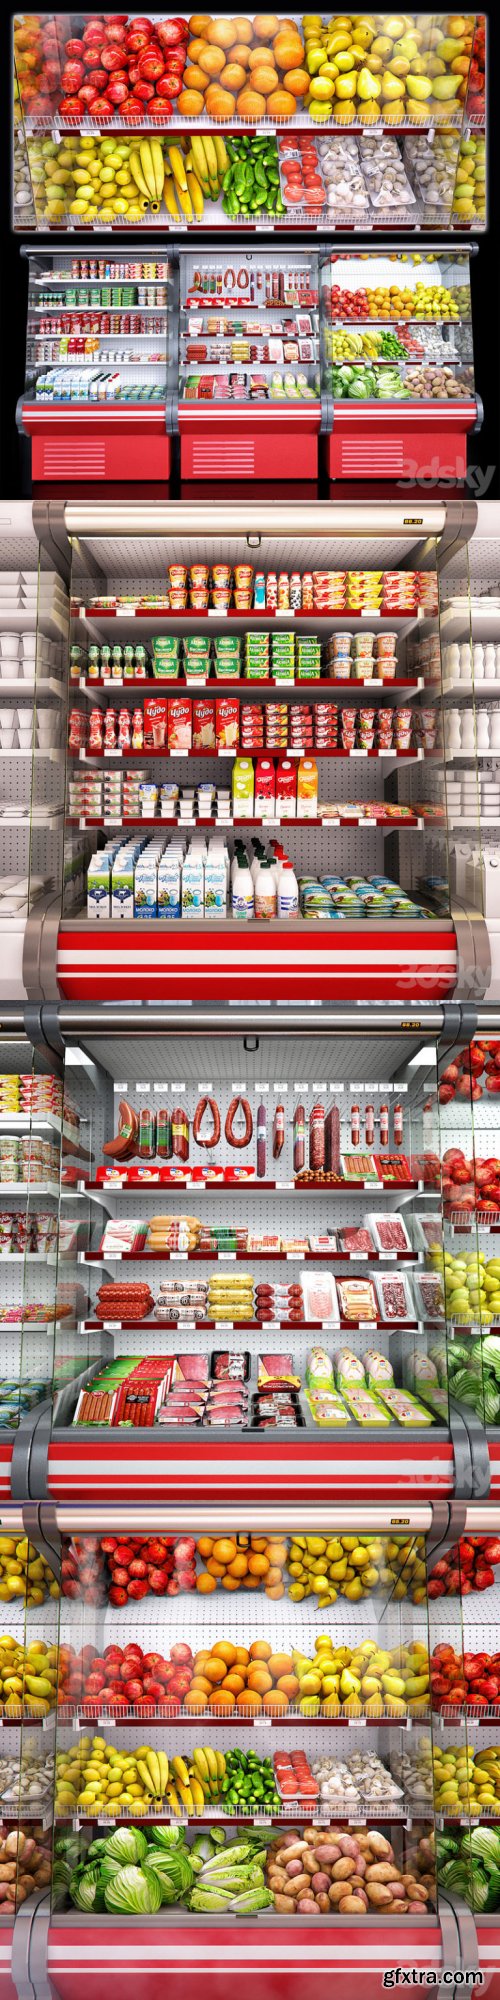 Market Refrigerators